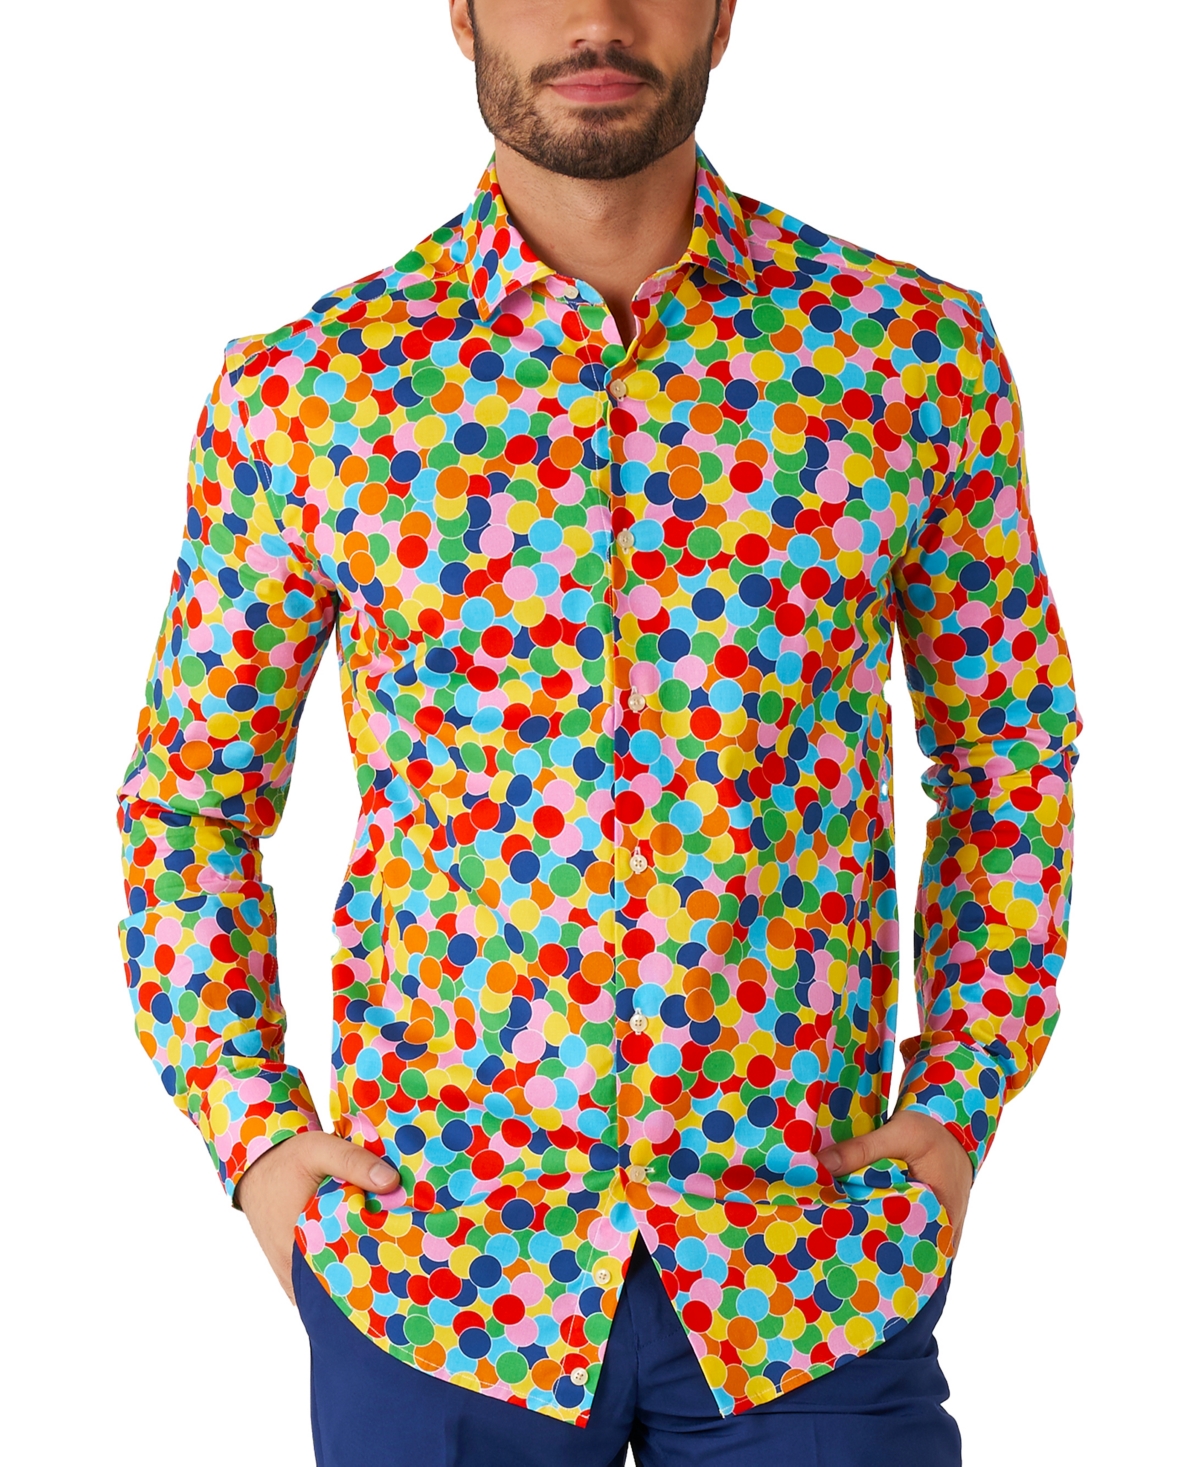 Men's Long-Sleeve Confetti Graphic Shirt - Miscellane